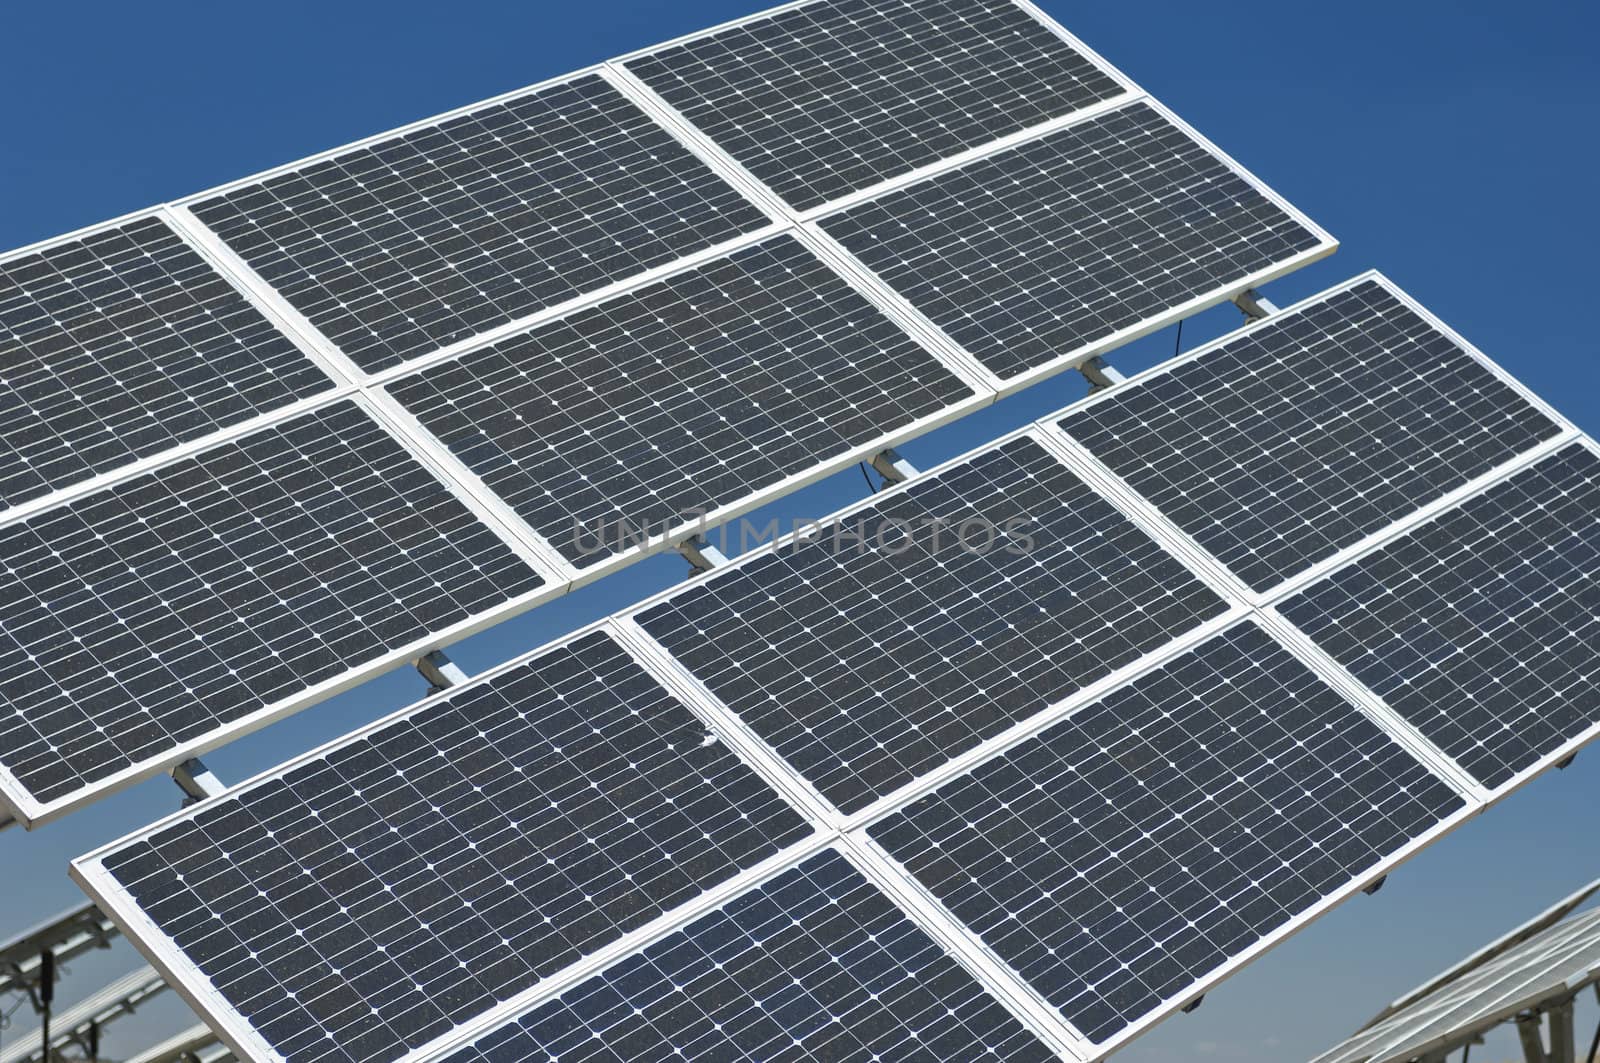 Solar power plant by mrfotos